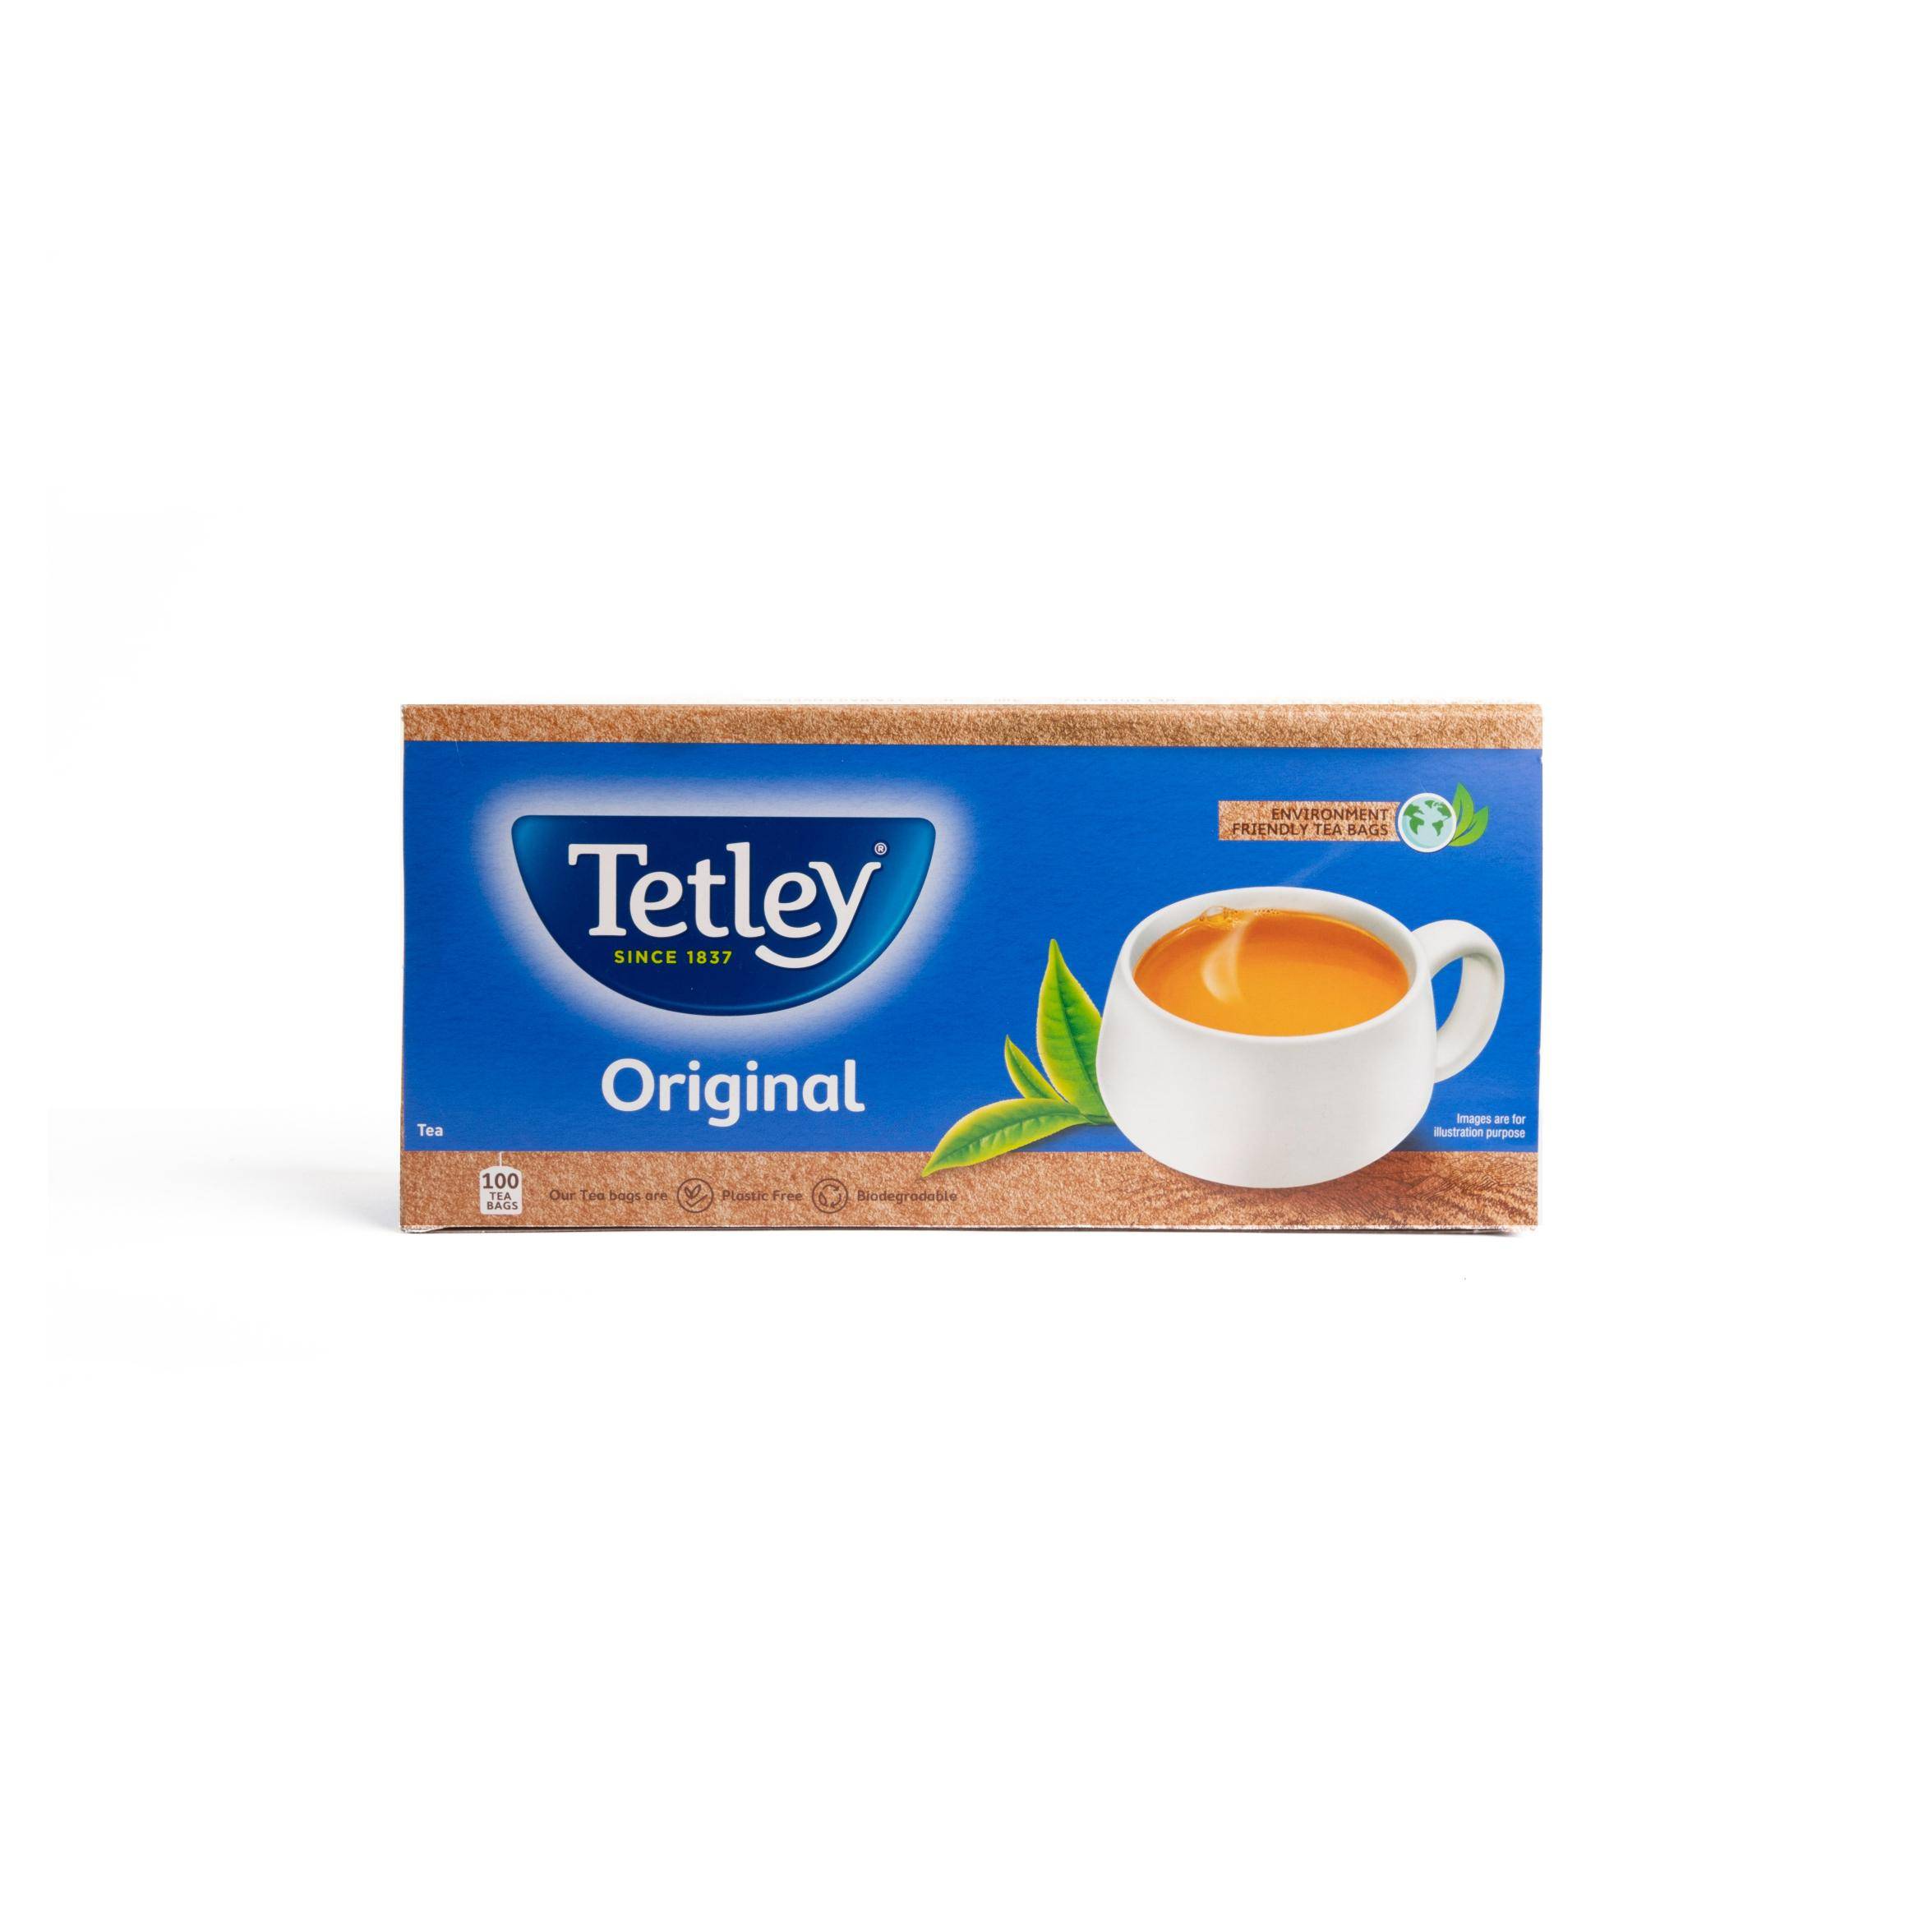 Tetley Regular Tea Original Envelope Tea Bags 100s